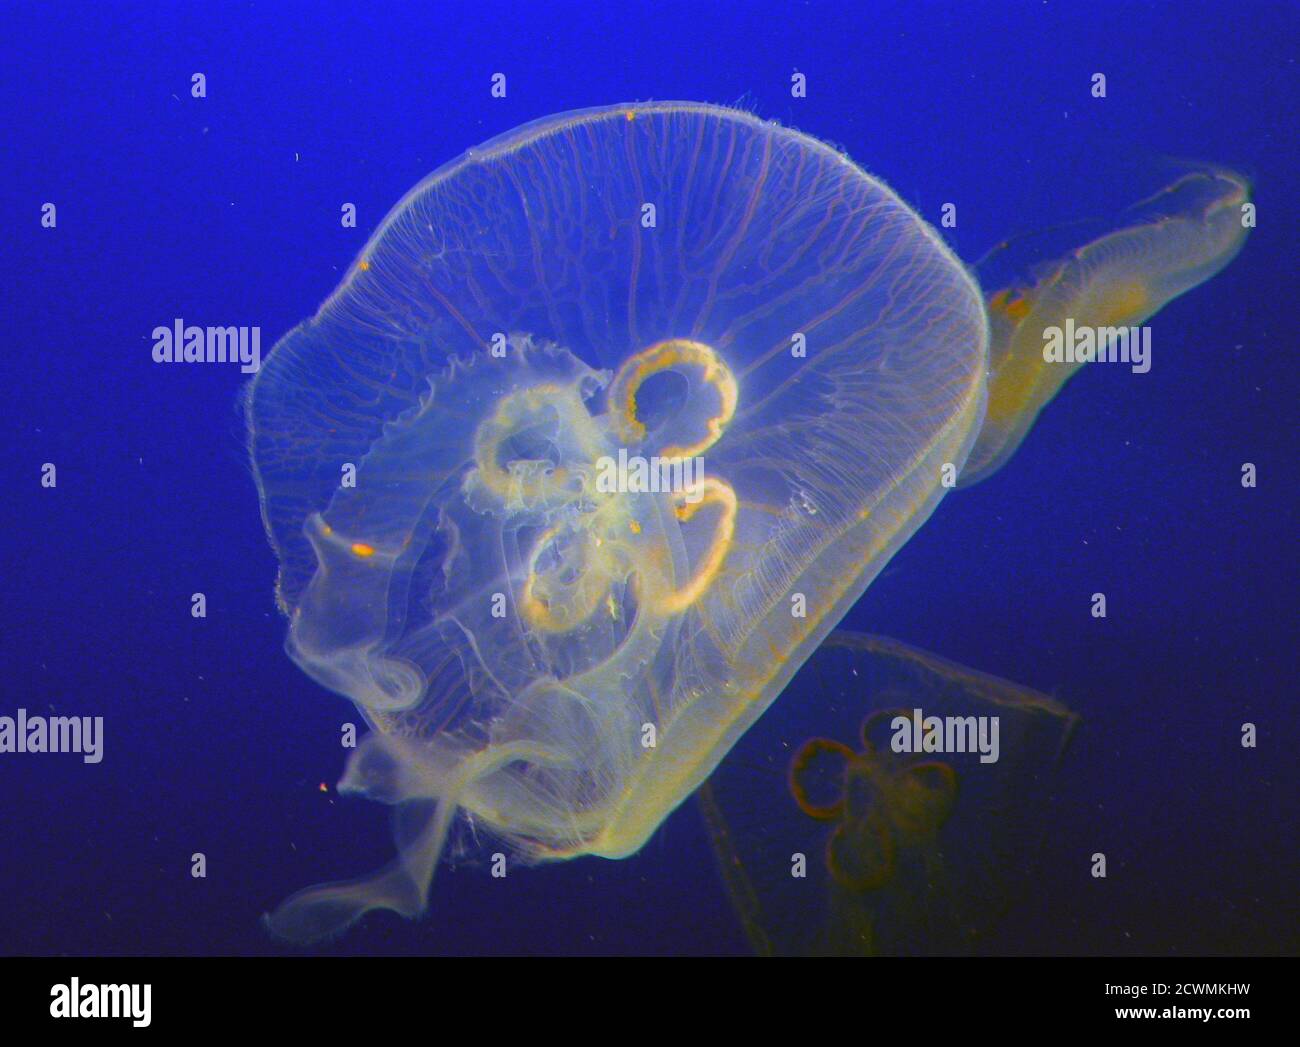 Aurelia aurita (chiamata anche medusa comune, meduse di luna, gelatina di luna o vasellame) Foto Stock